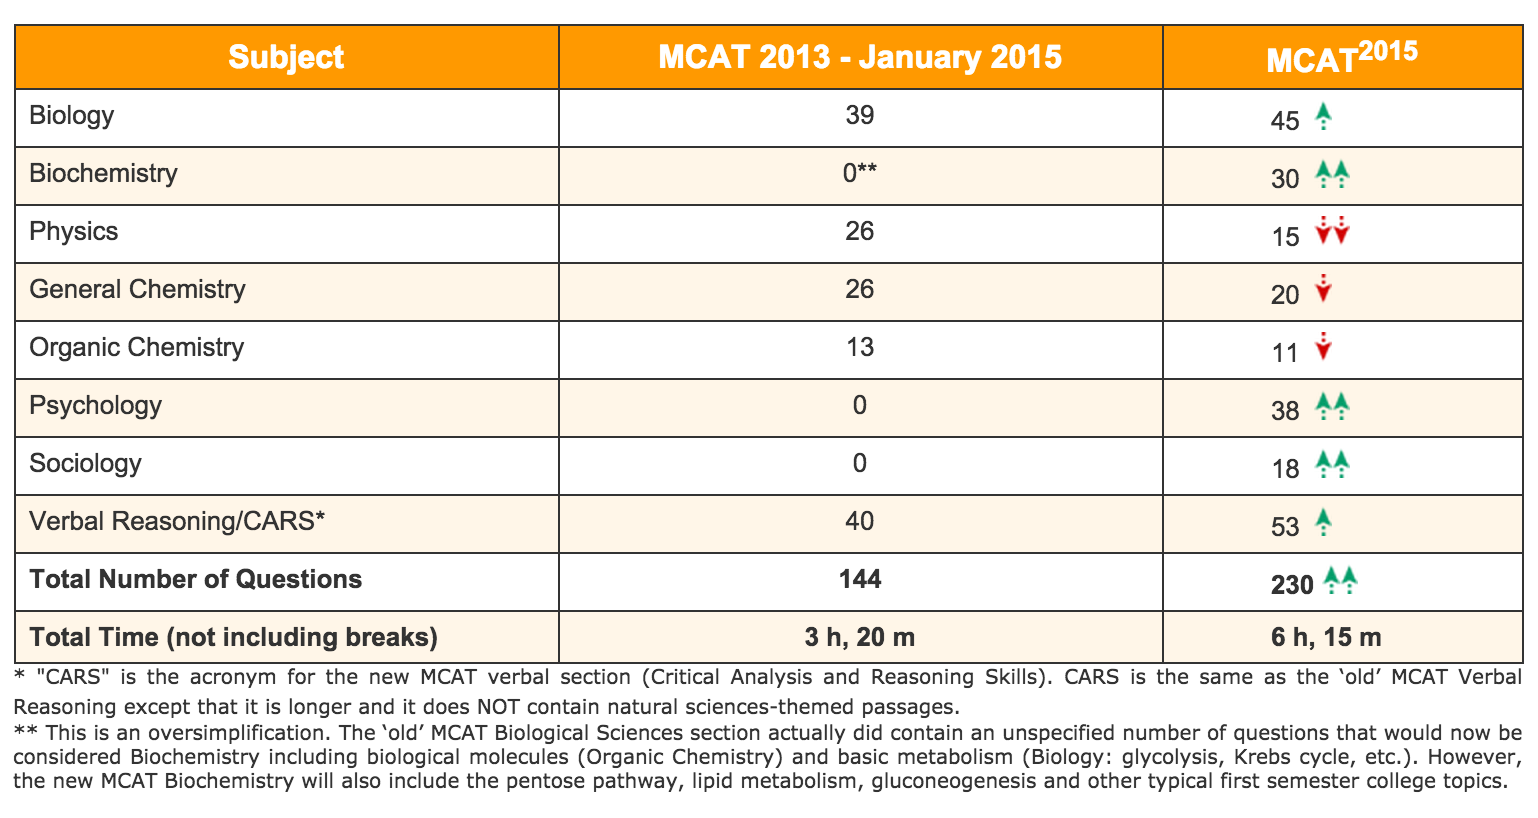 iMCATniss: Overview of the New MCAT